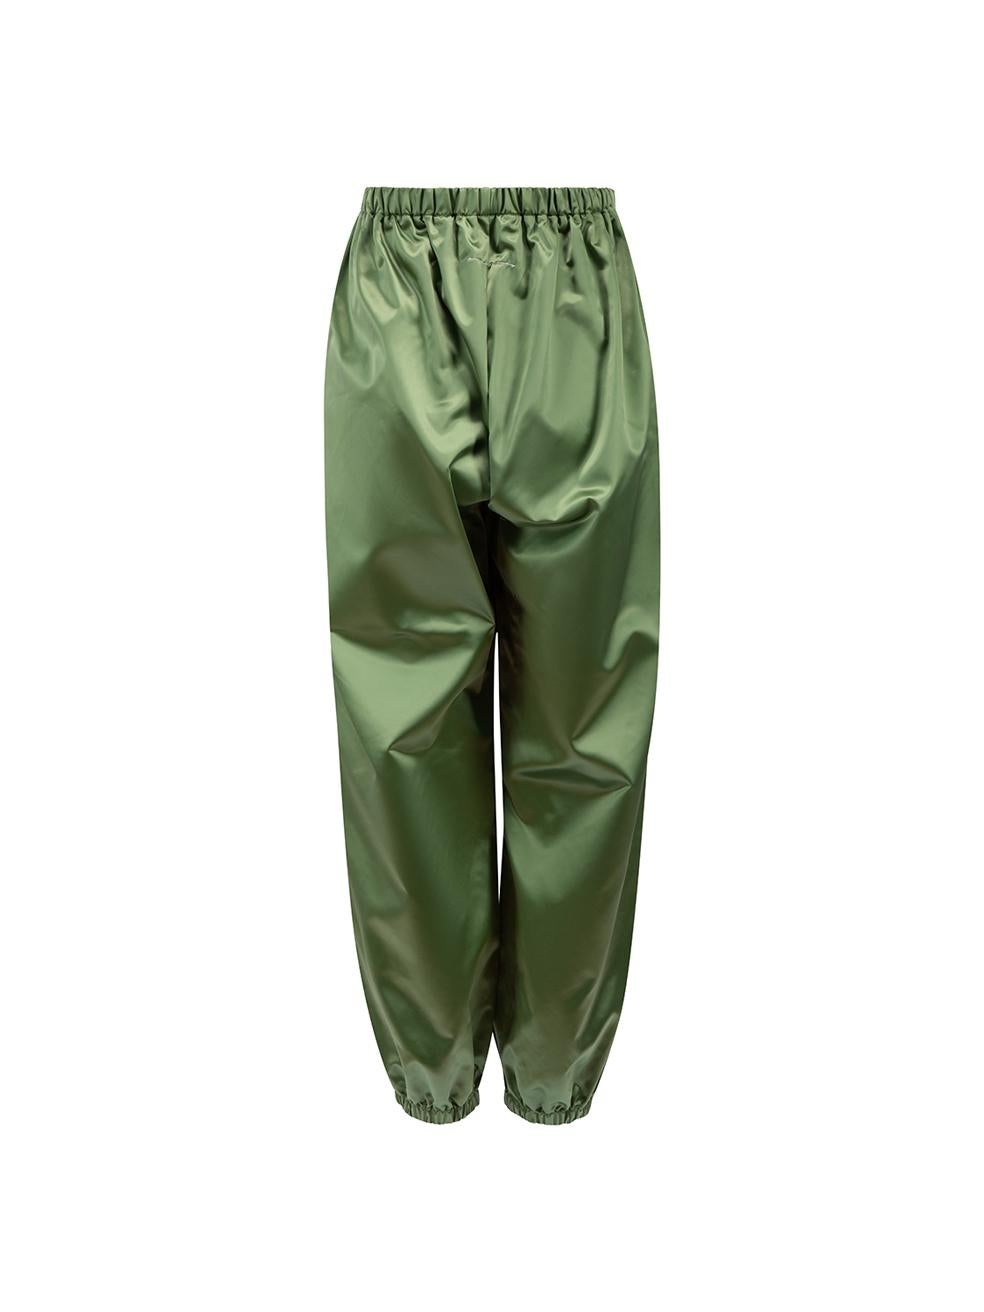 Maison Margiela MM6 Maison Margiela Green Sweatpants Size S In Good Condition In London, GB